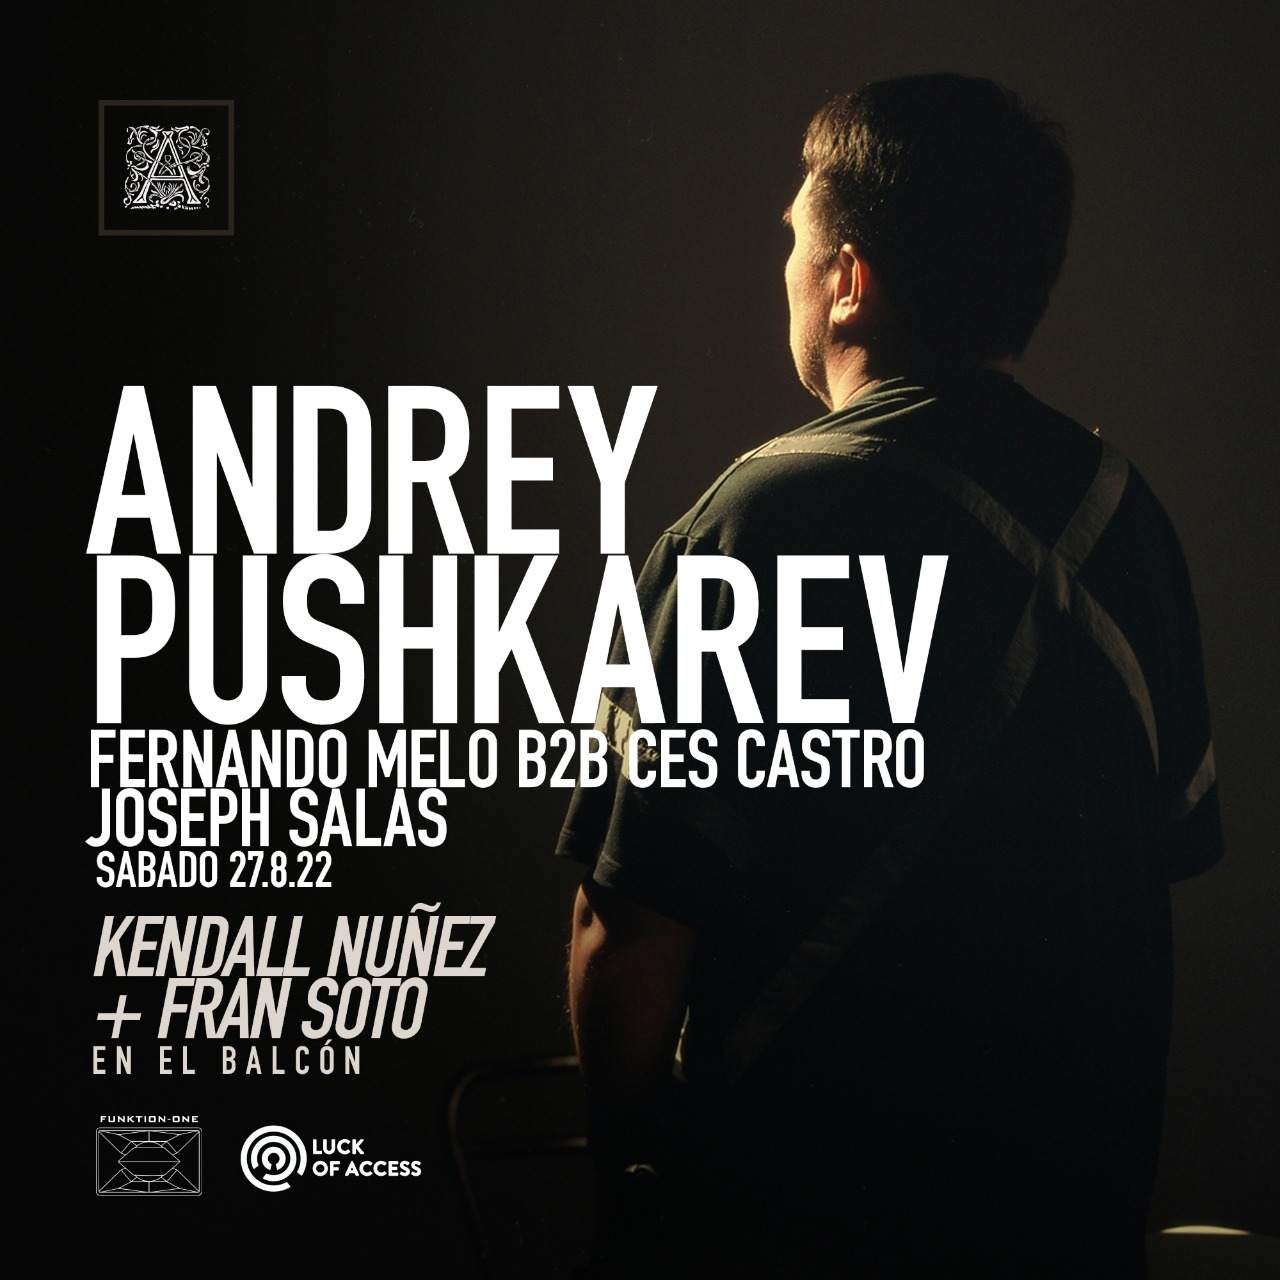 Antik presenta: Andrey Pushkarev - Flyer front